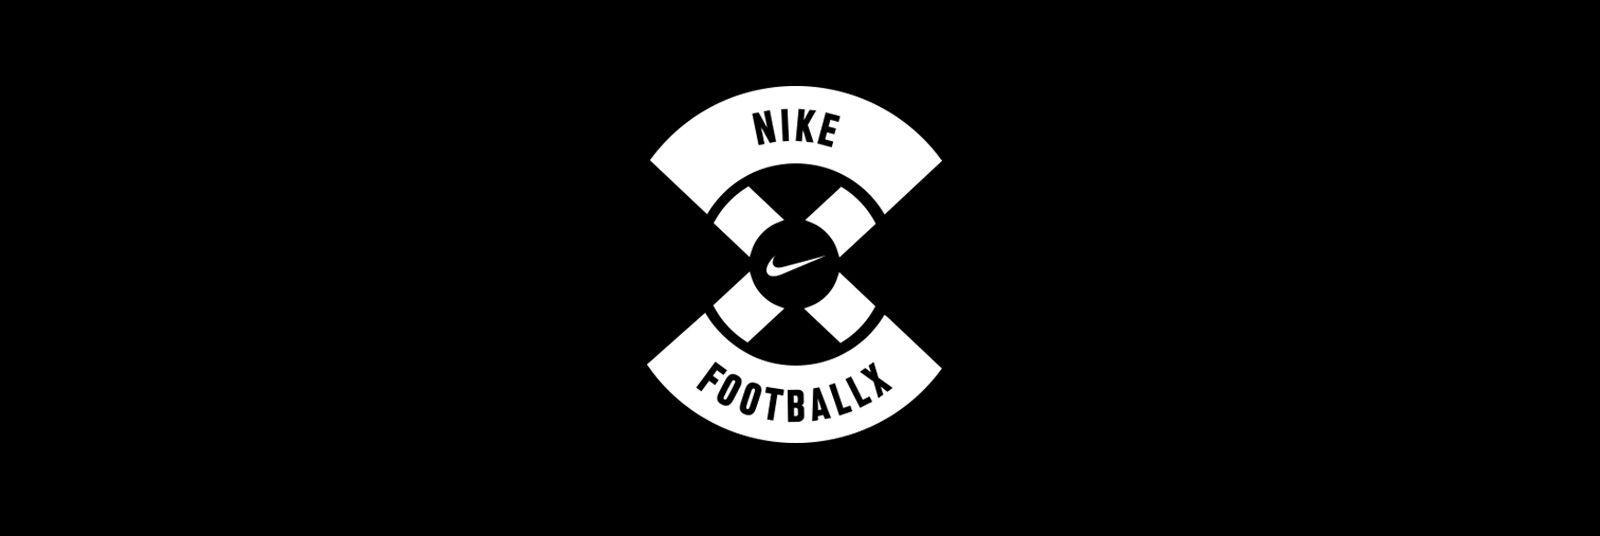 Black and White Nike Football Logo - History of FootballX. Nike.com (XF)